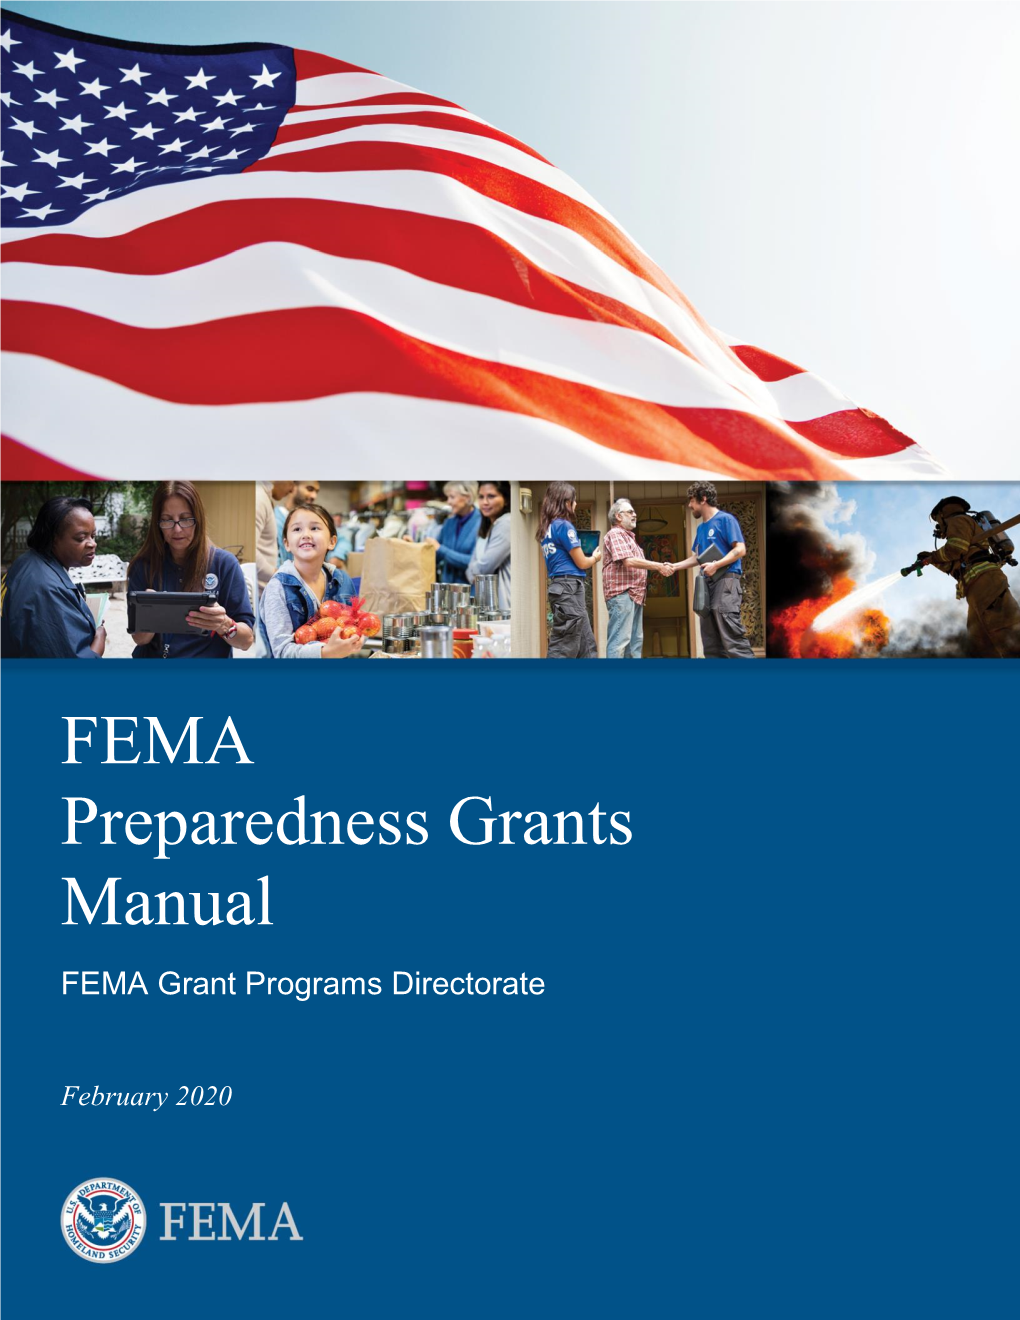 FEMA Preparedness Grants Manual 2020